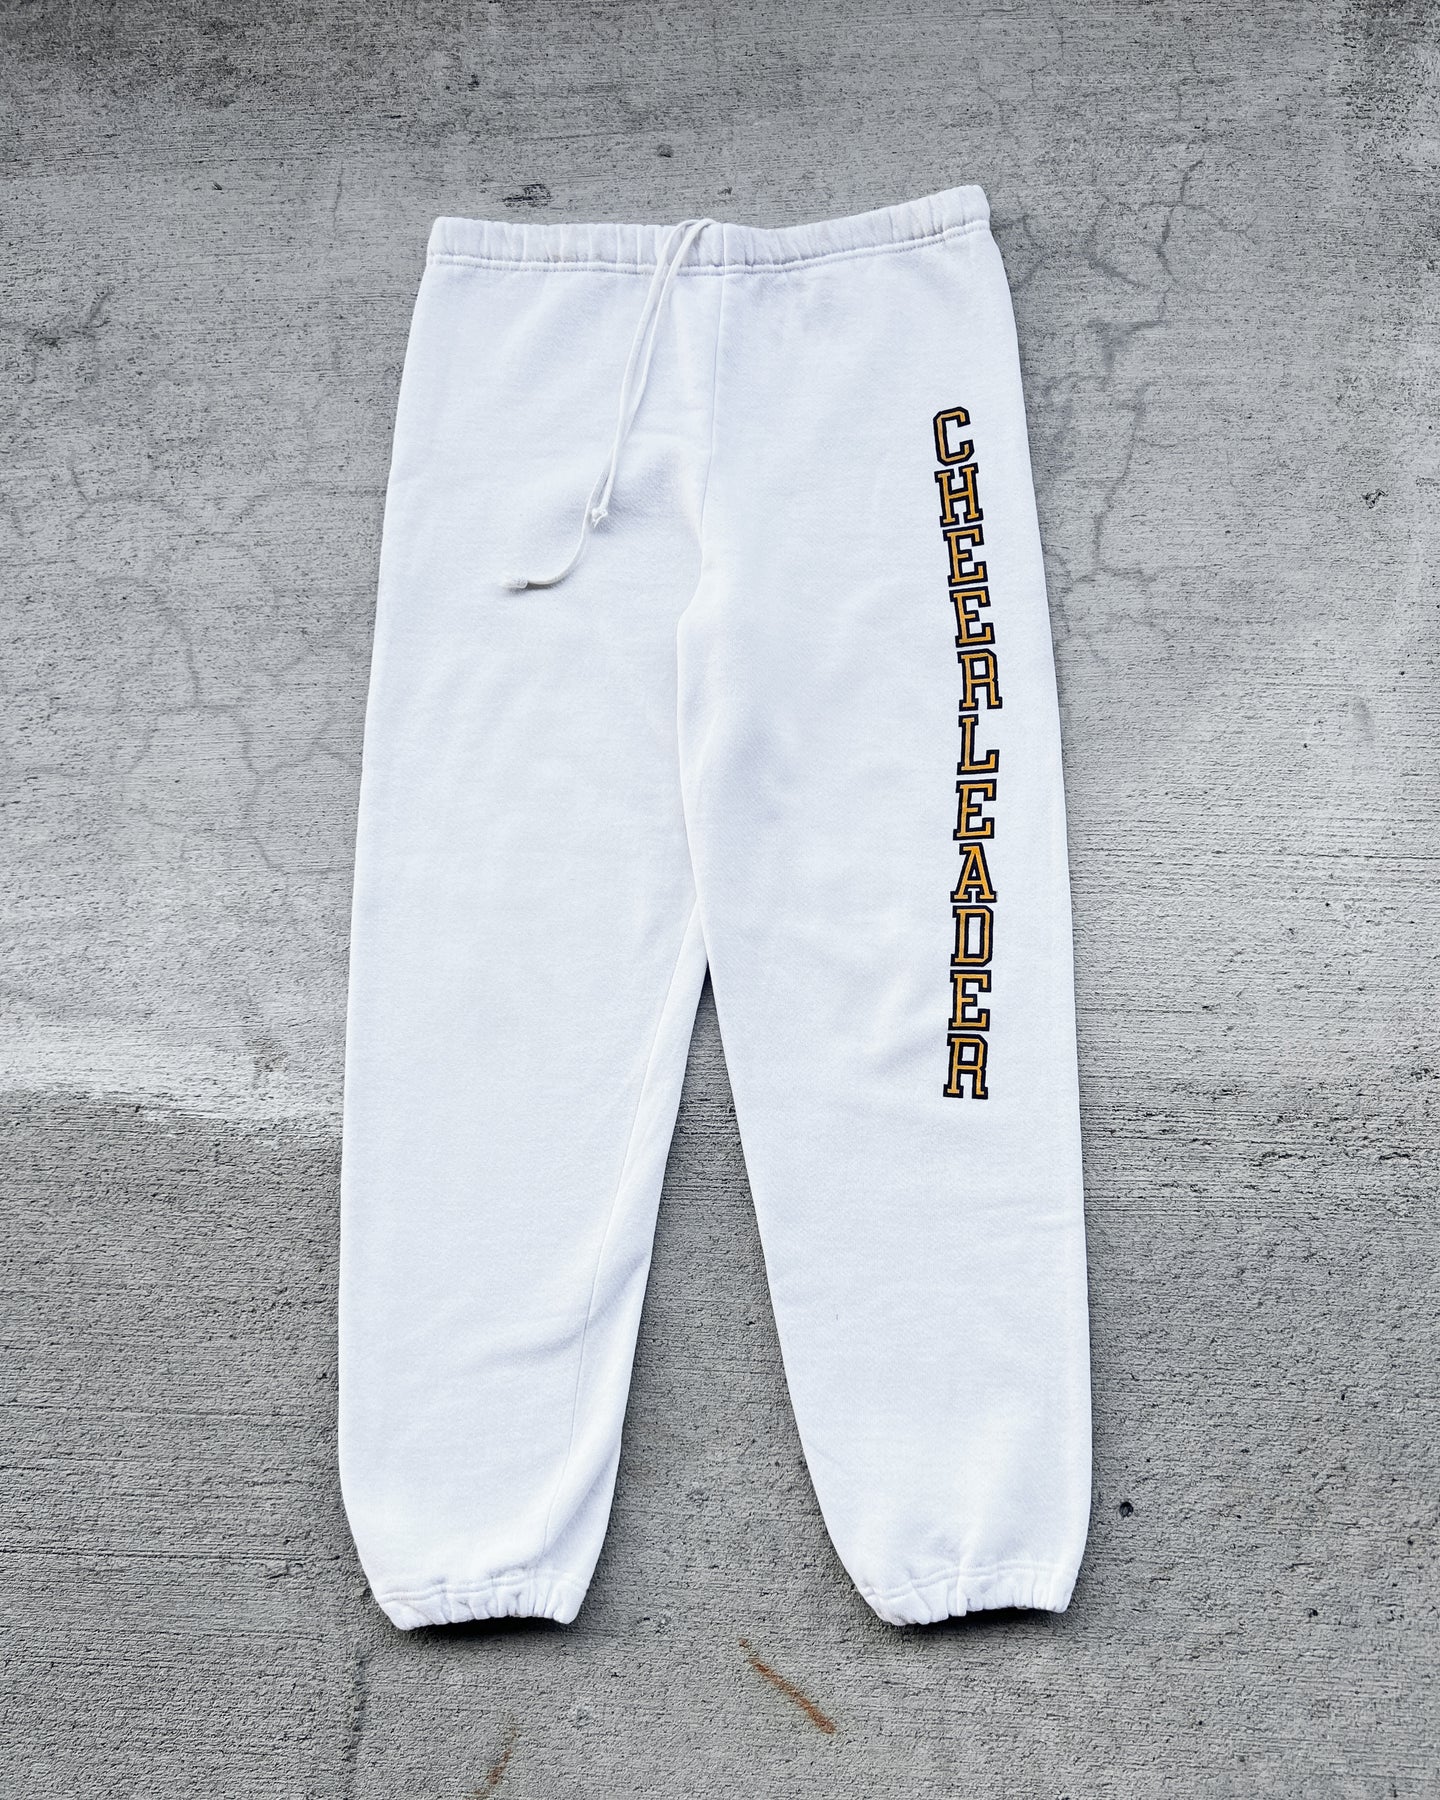 1980s Hixson Cheerleader Cloud White Sweatpants - Size 31 x 27